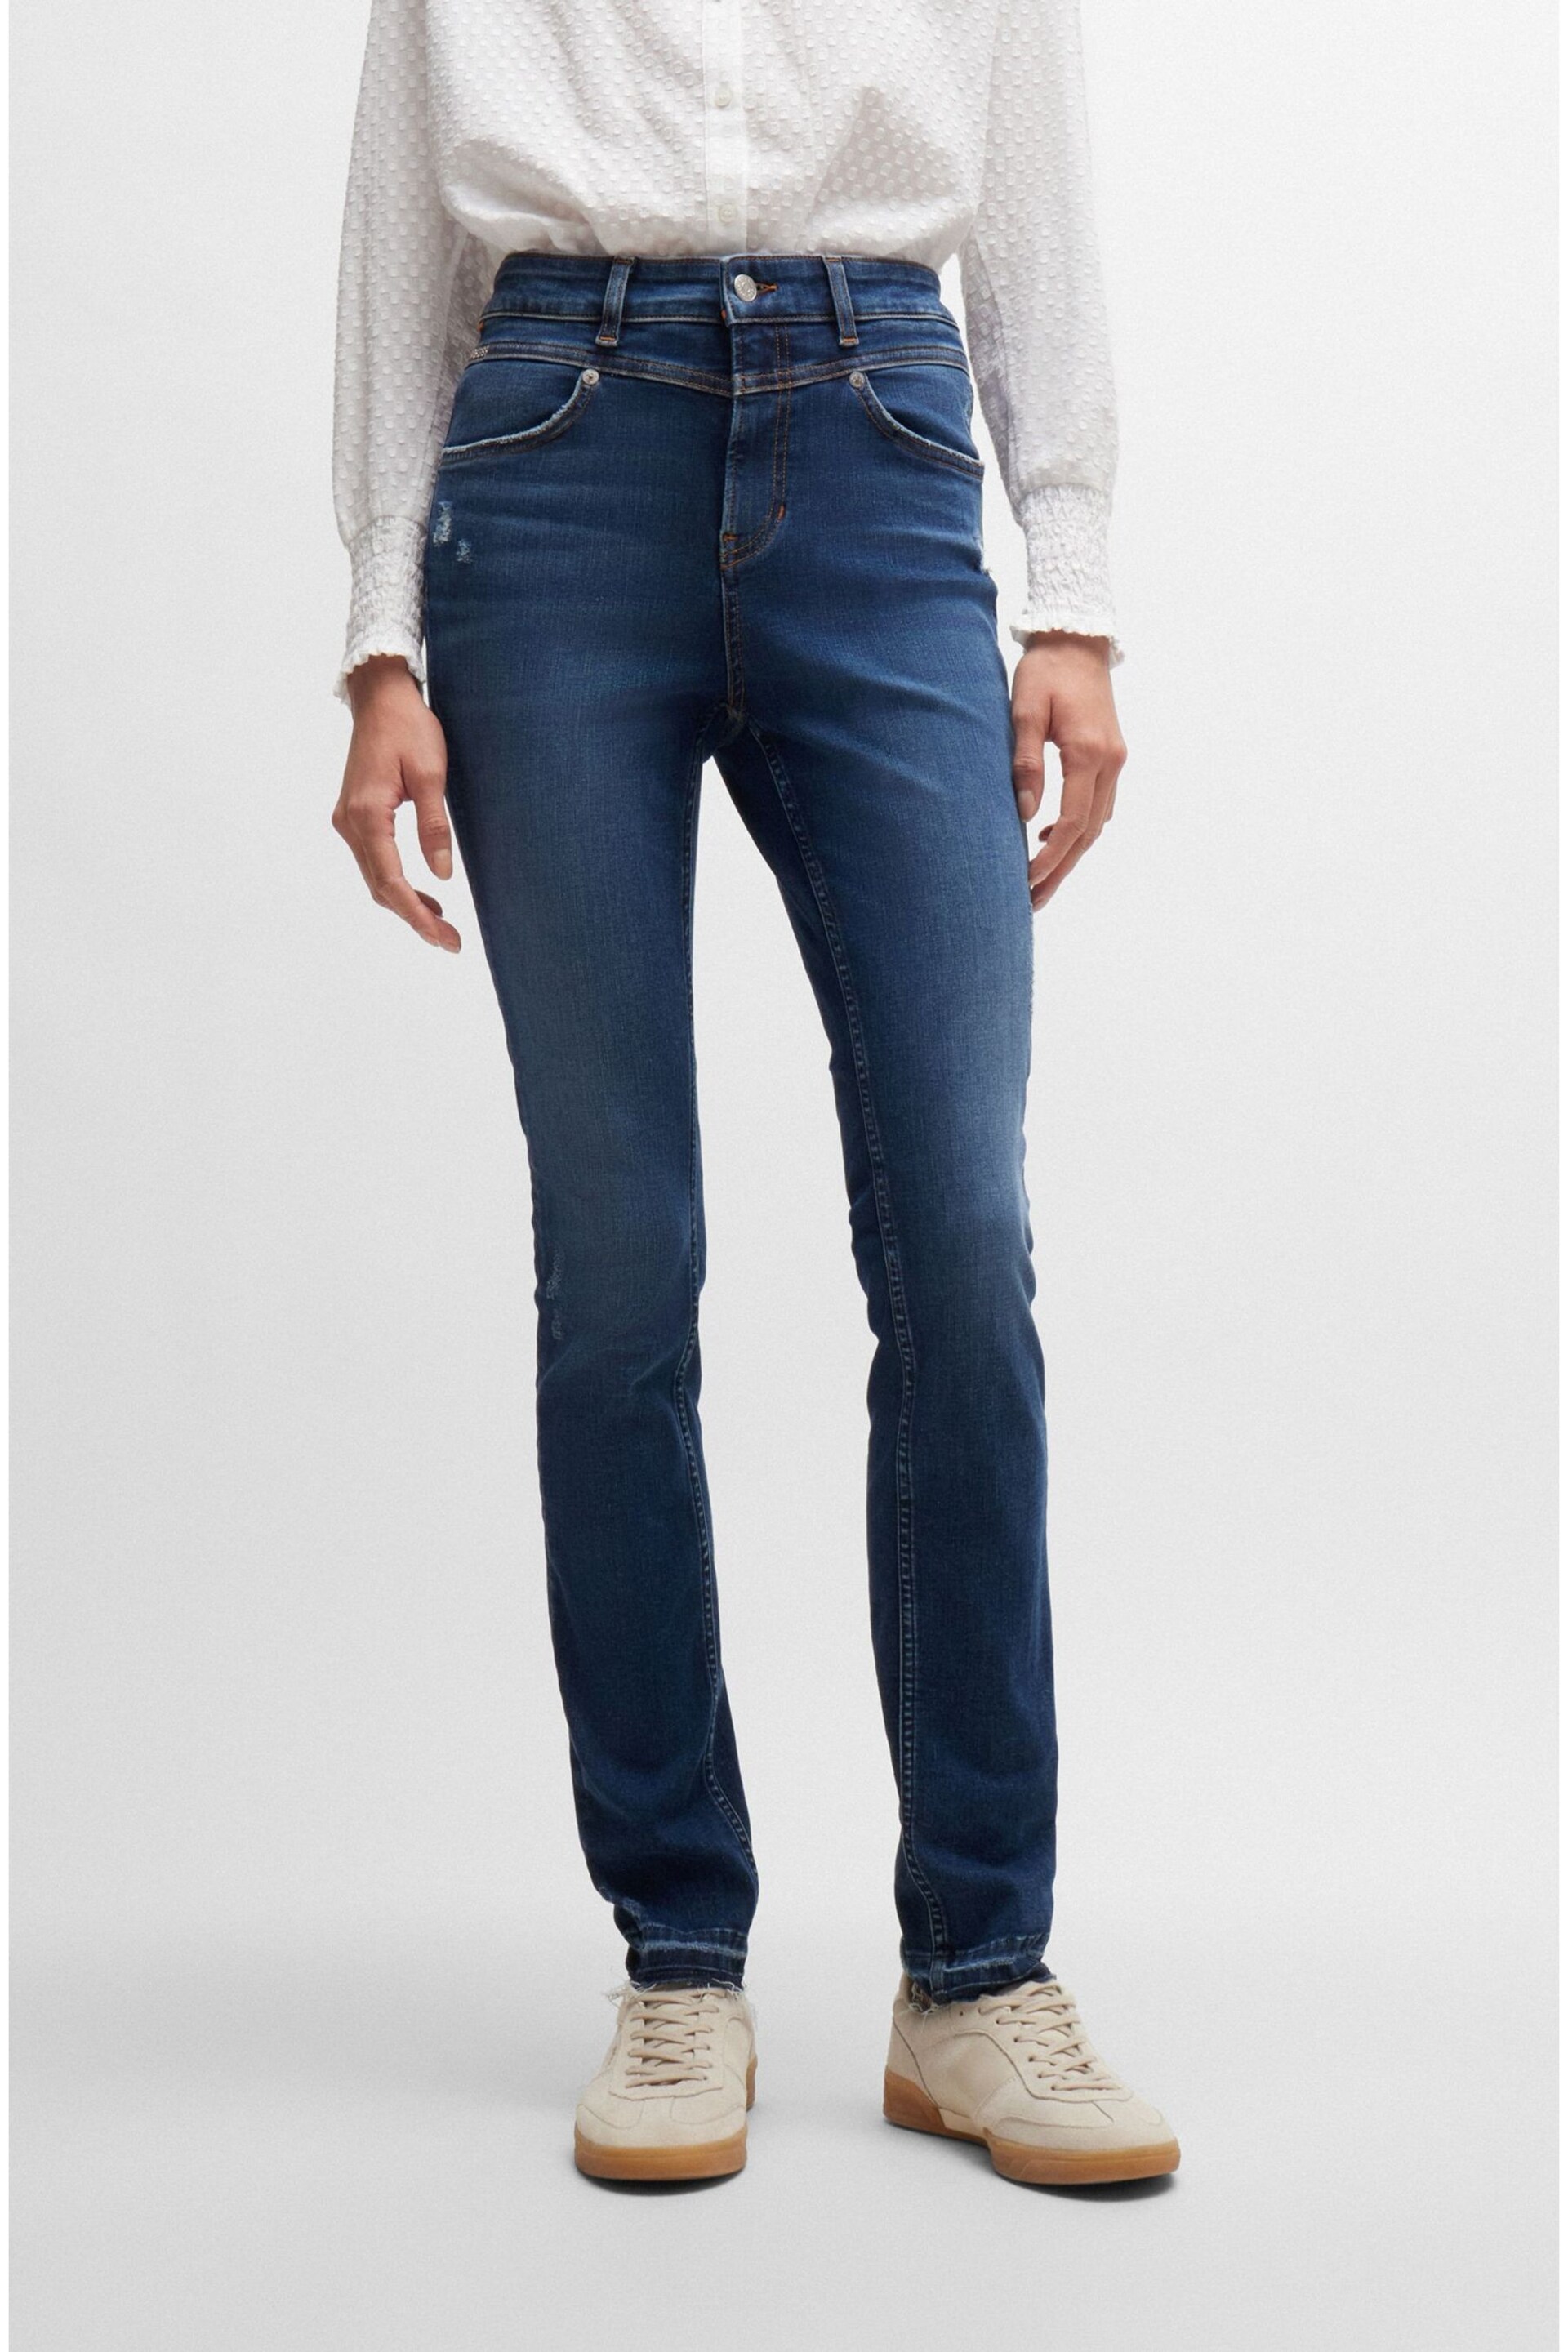 BOSS Dark Blue Slim Fit Supreme Movement Stretch Denim Jeans - Image 1 of 5